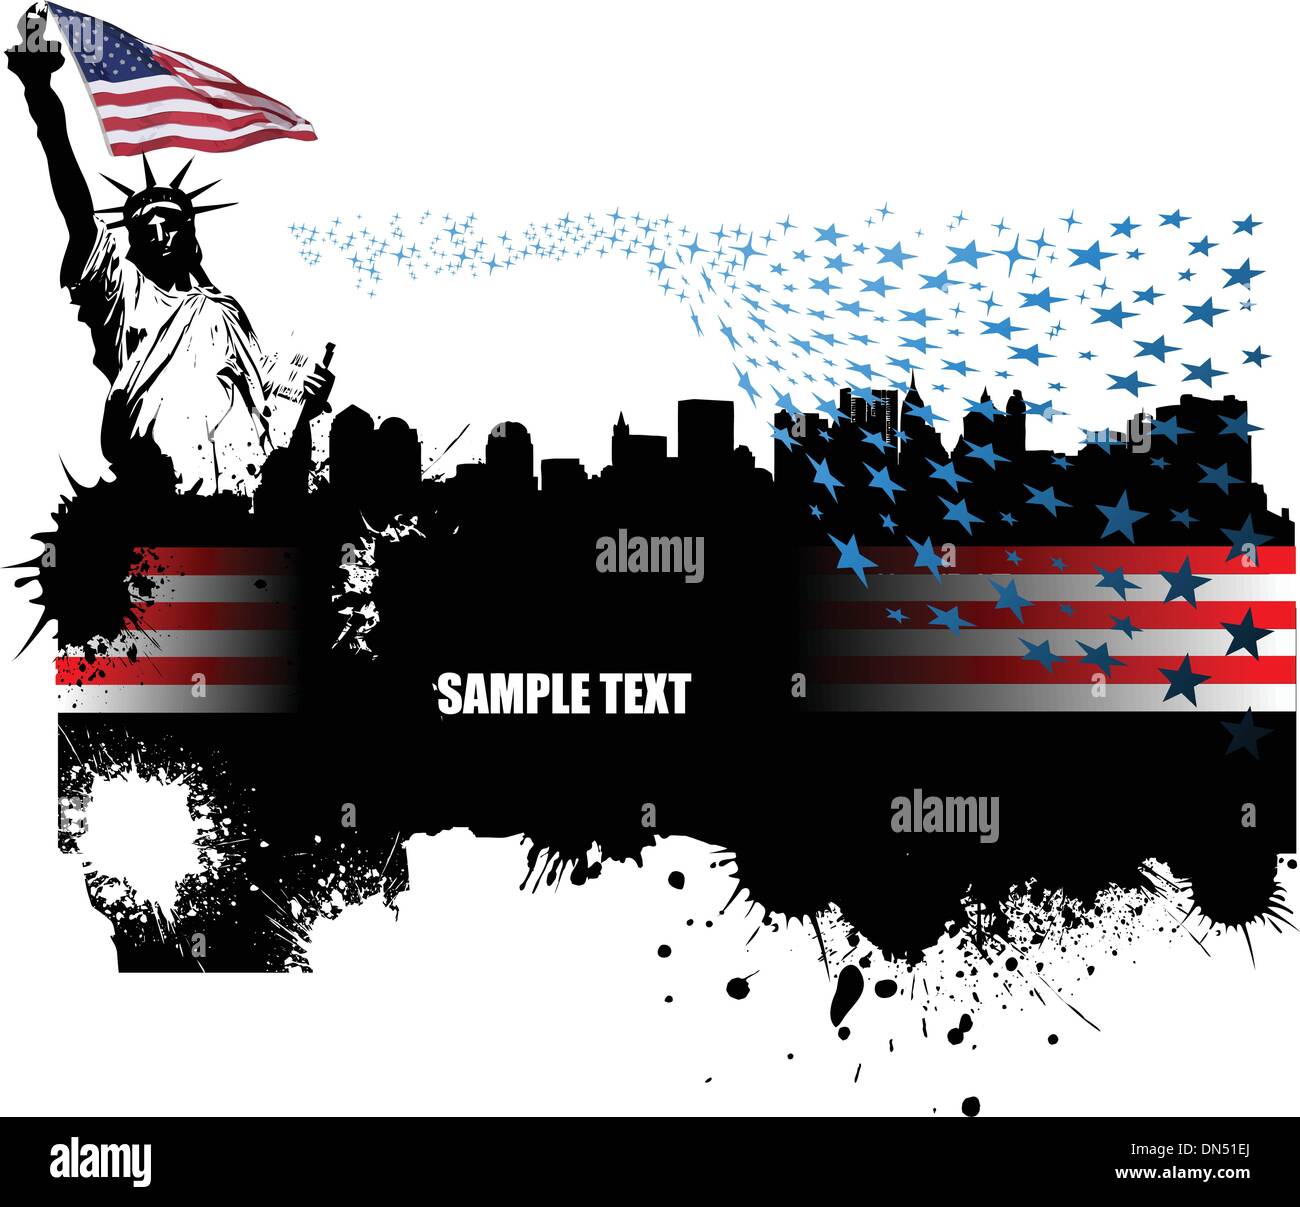 Banner mit amerikanischen Bilder. Vektor-illustration Stock Vektor